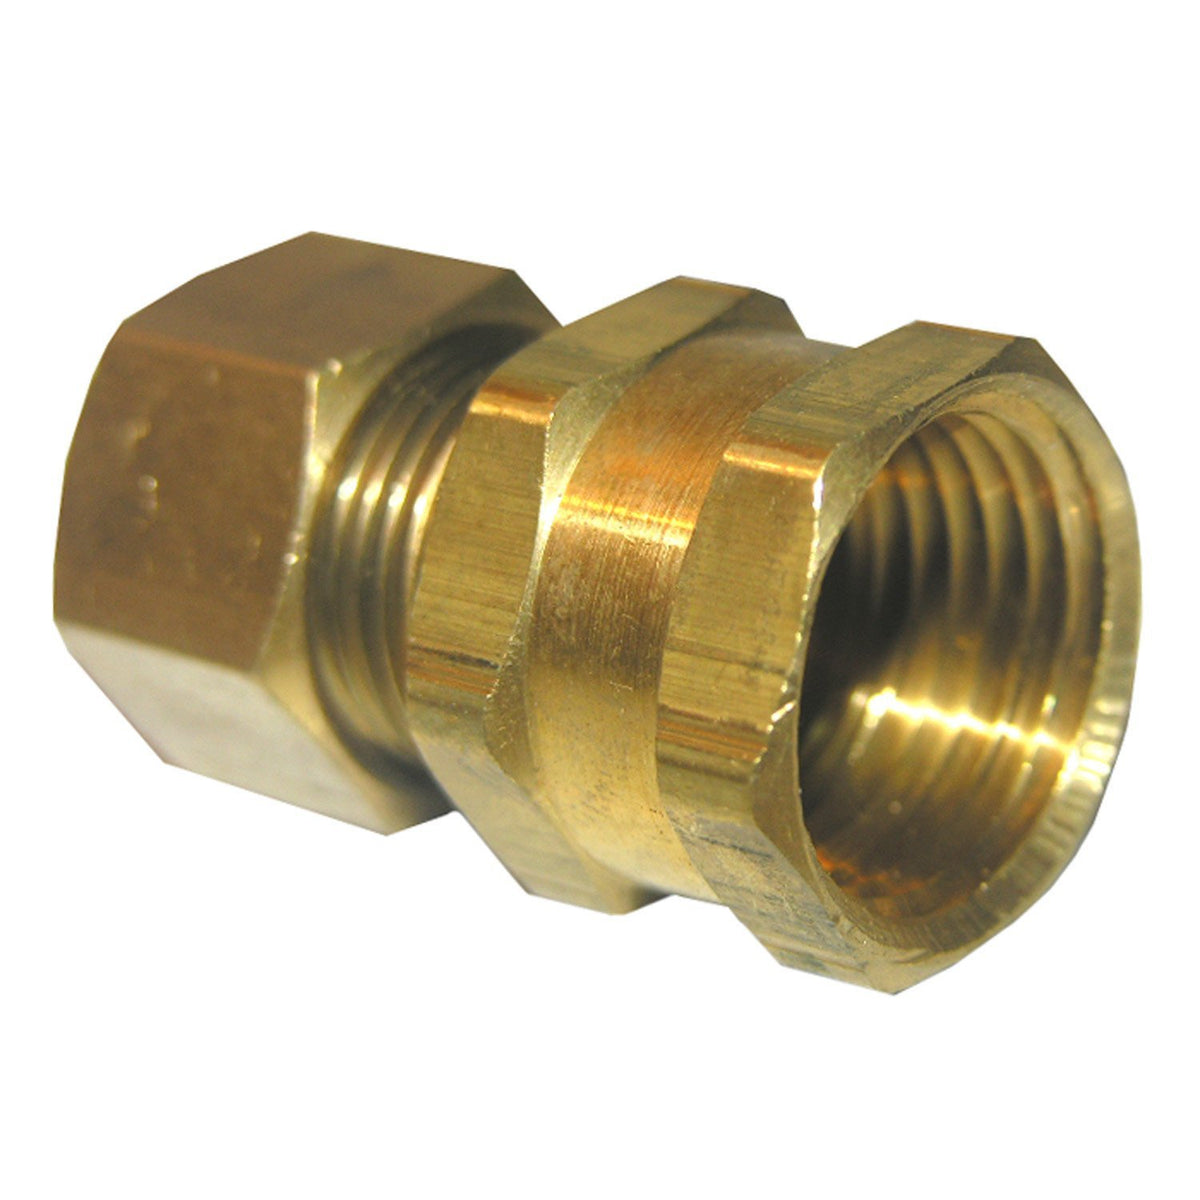 Lasco 17-6651 Lead-Free Brass Compression Adapter, 1/2" CMP x 1/2" FPT